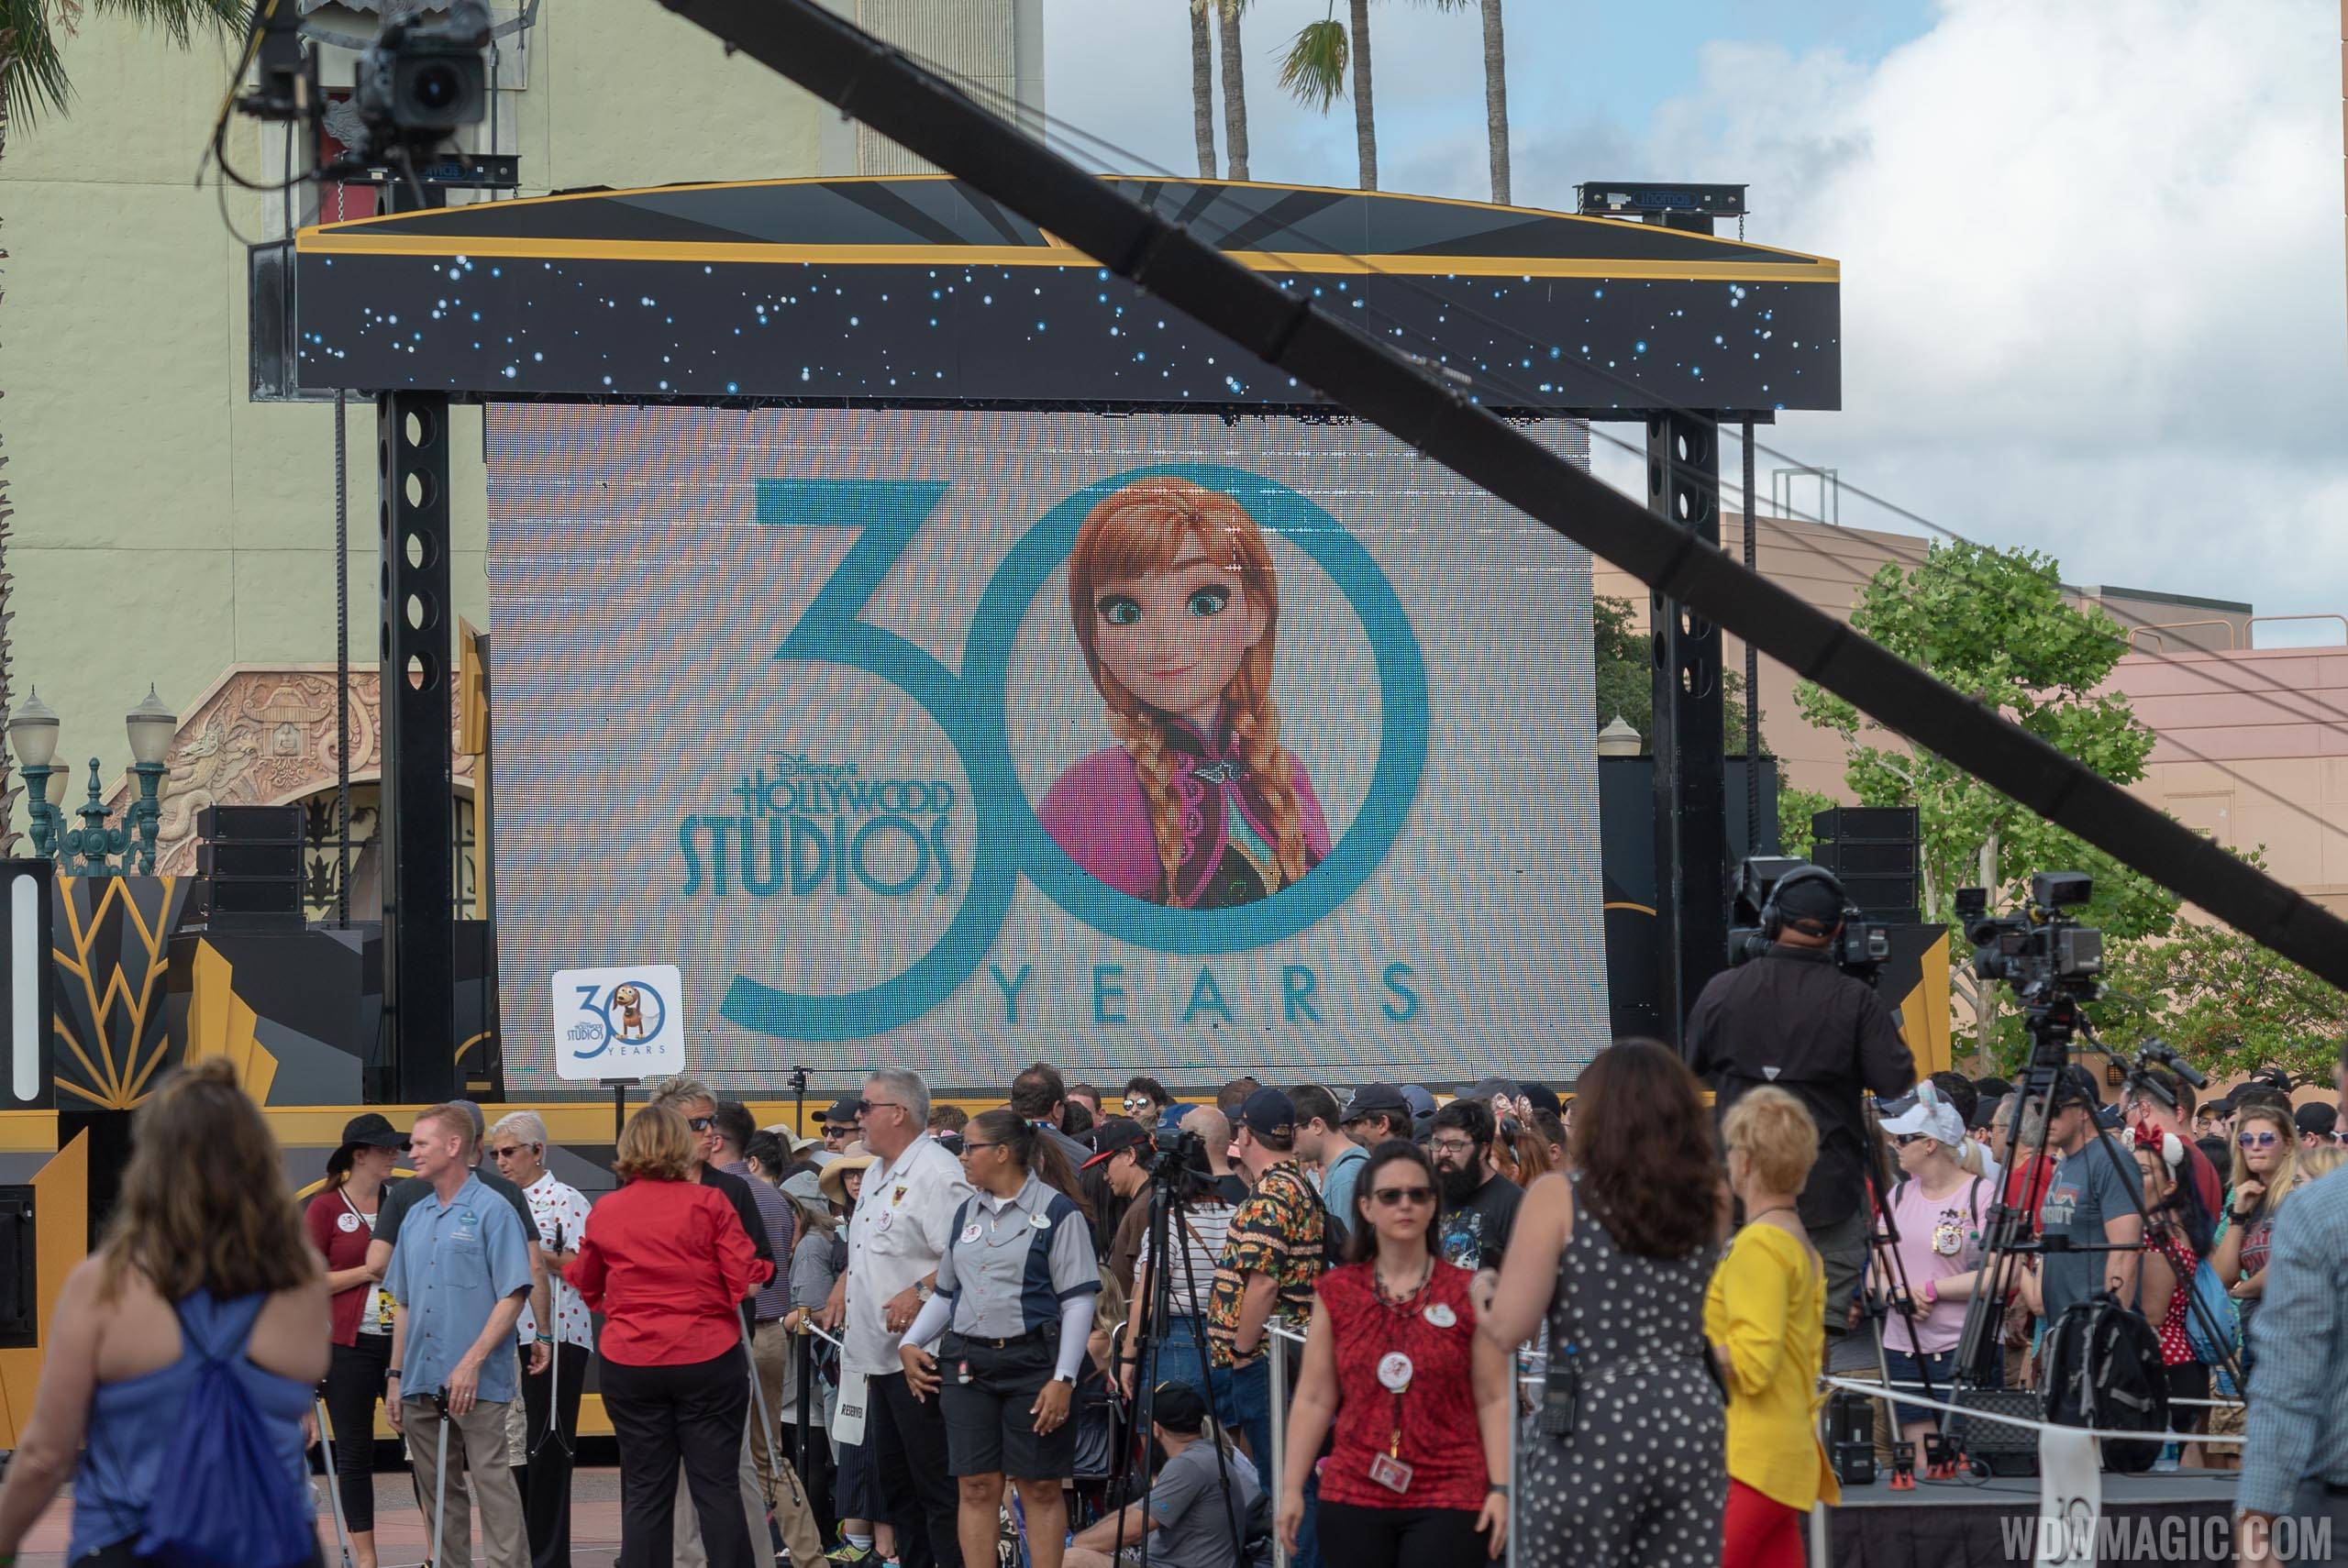 Disney's Hollywood Studios 30th Anniversary celebration